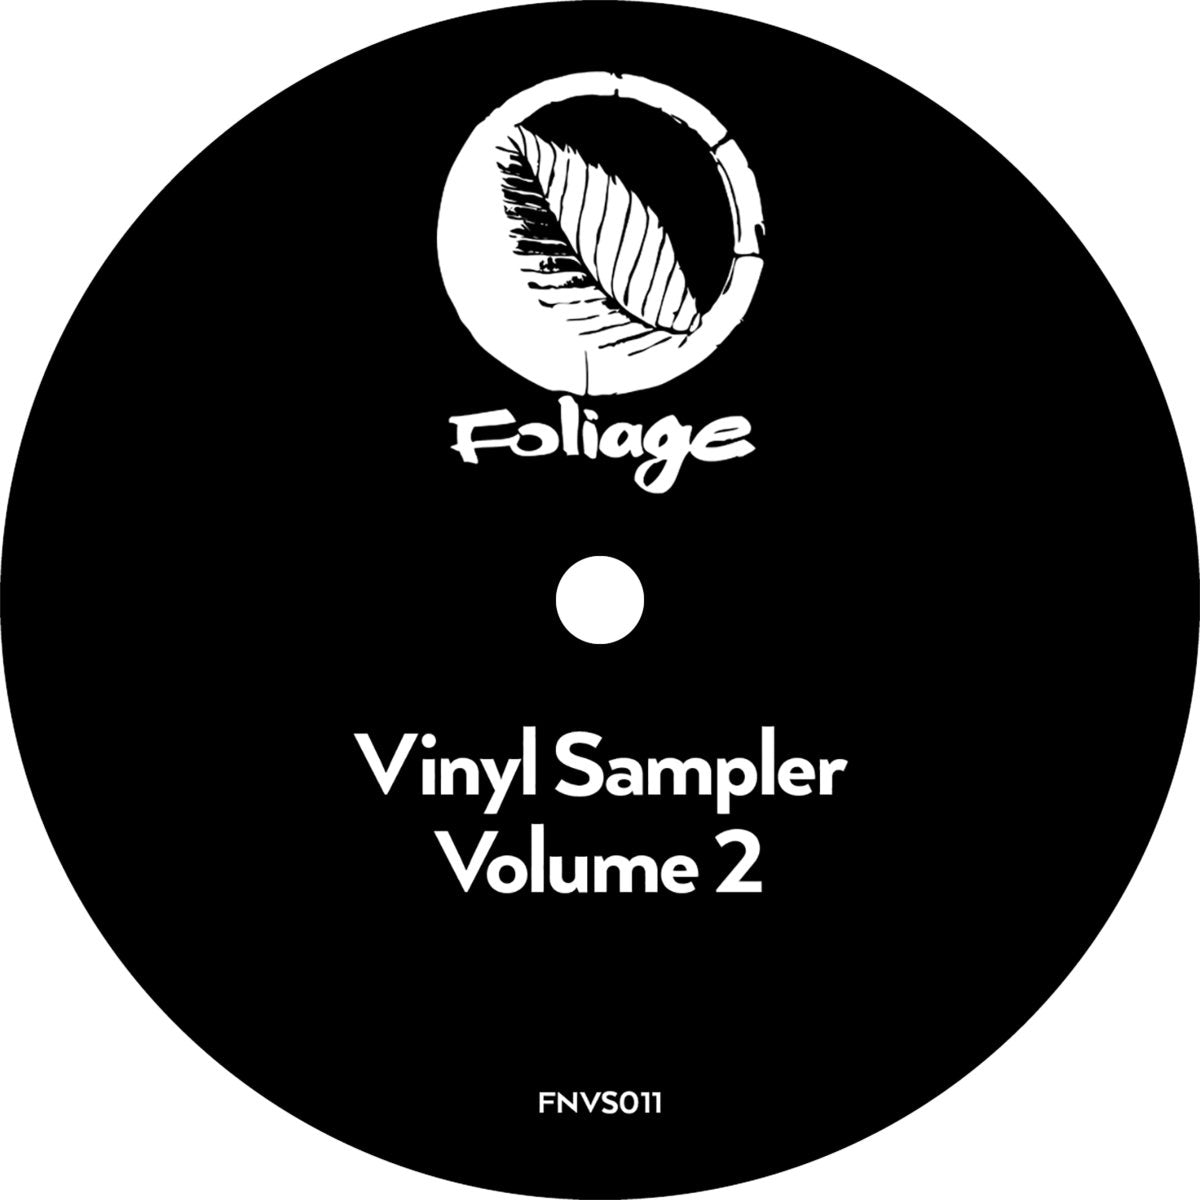 VA - Foliage Vinyl Sampler Volume 2